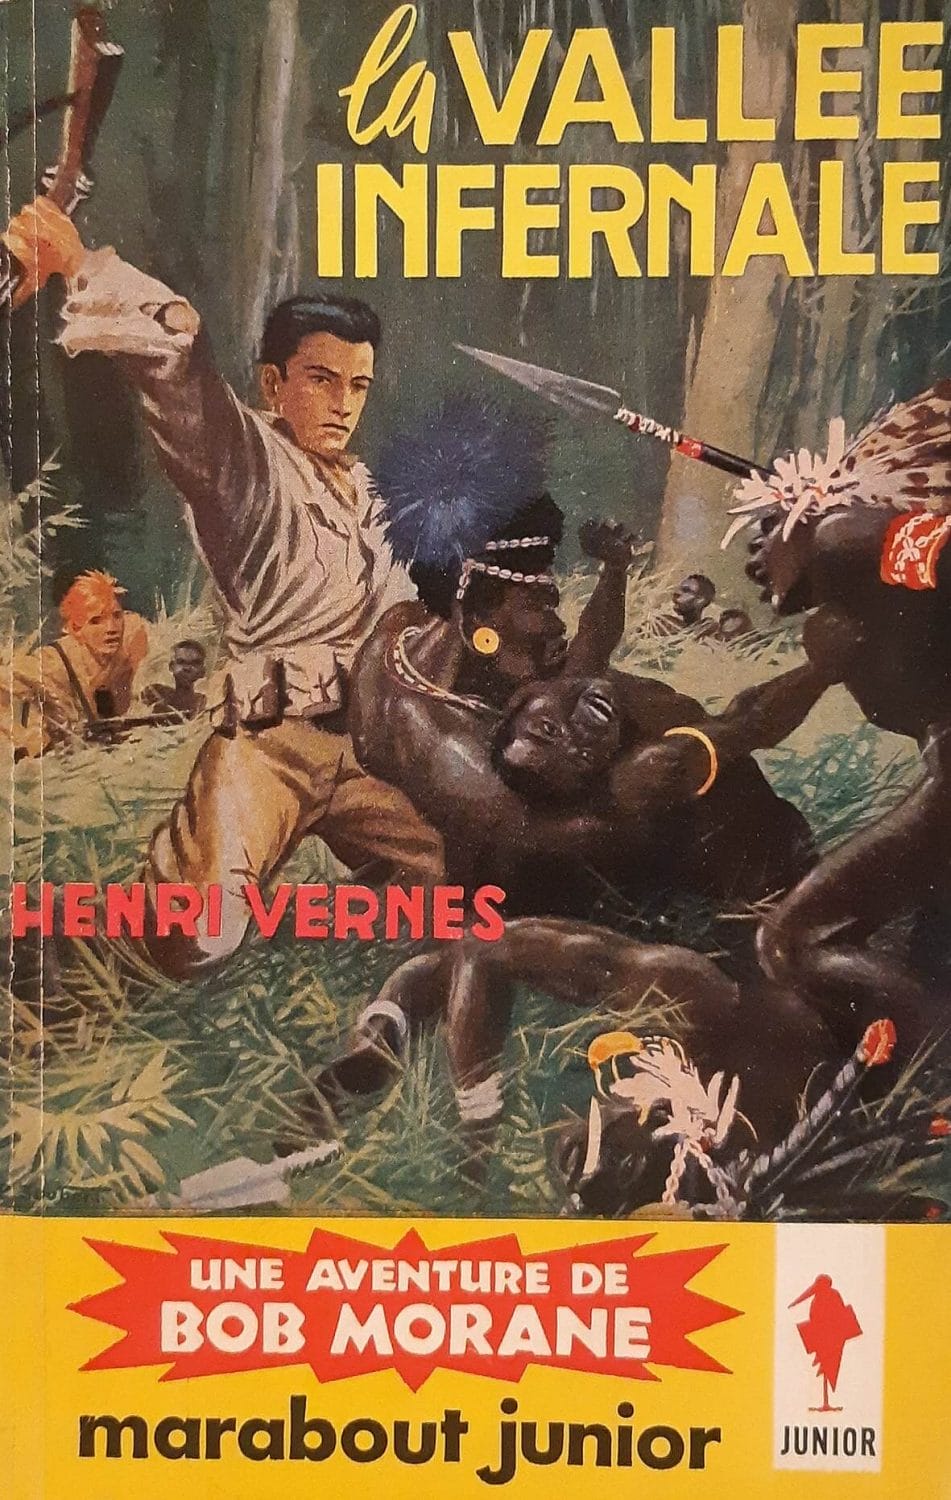 Bob Morane, the infernal valley by Henri Vernes (Marabout)